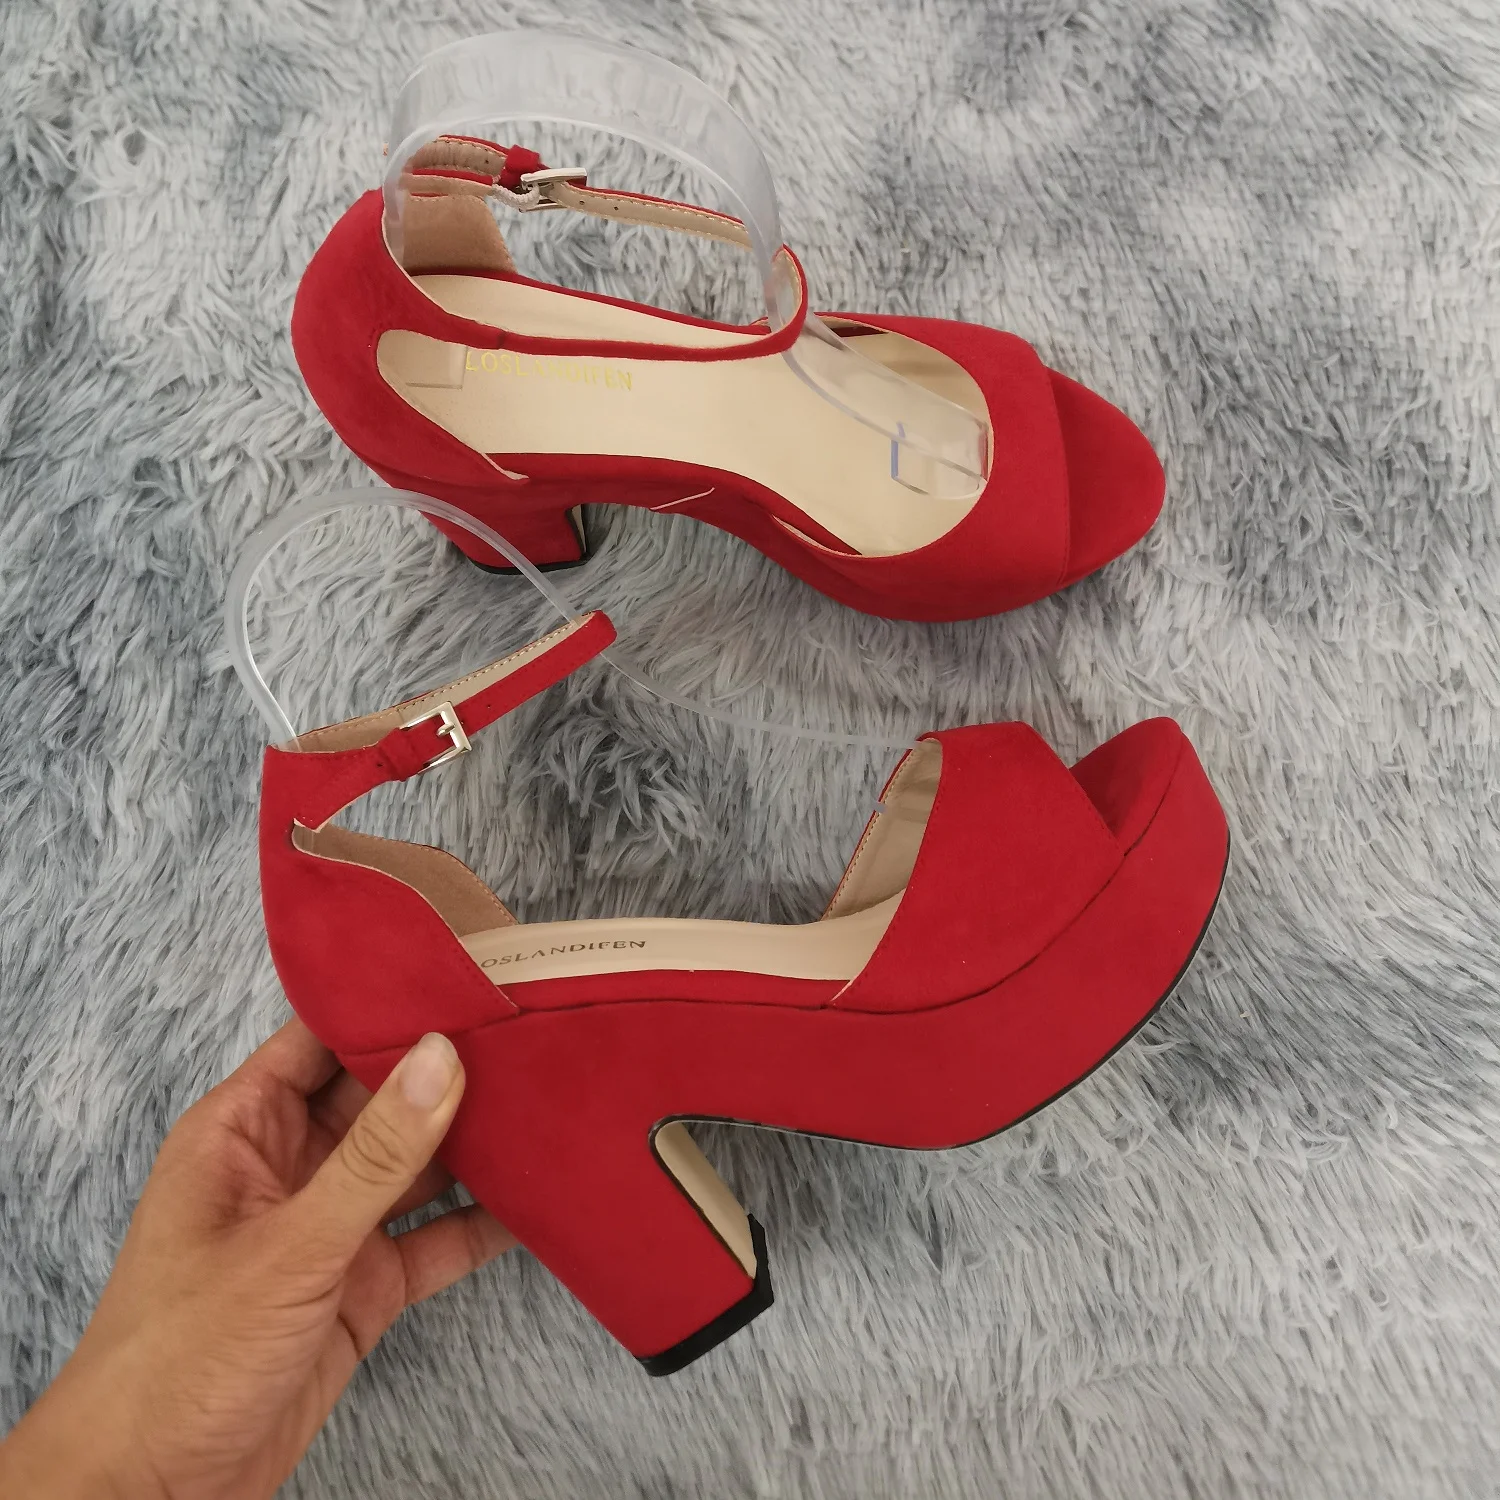 

LOSLANDIFEN Women Sandals 12cm Sexy Peep Toe Square High Heels Summer Ankle Strap Sandal Flock Platform Party Red Wedding Shoes